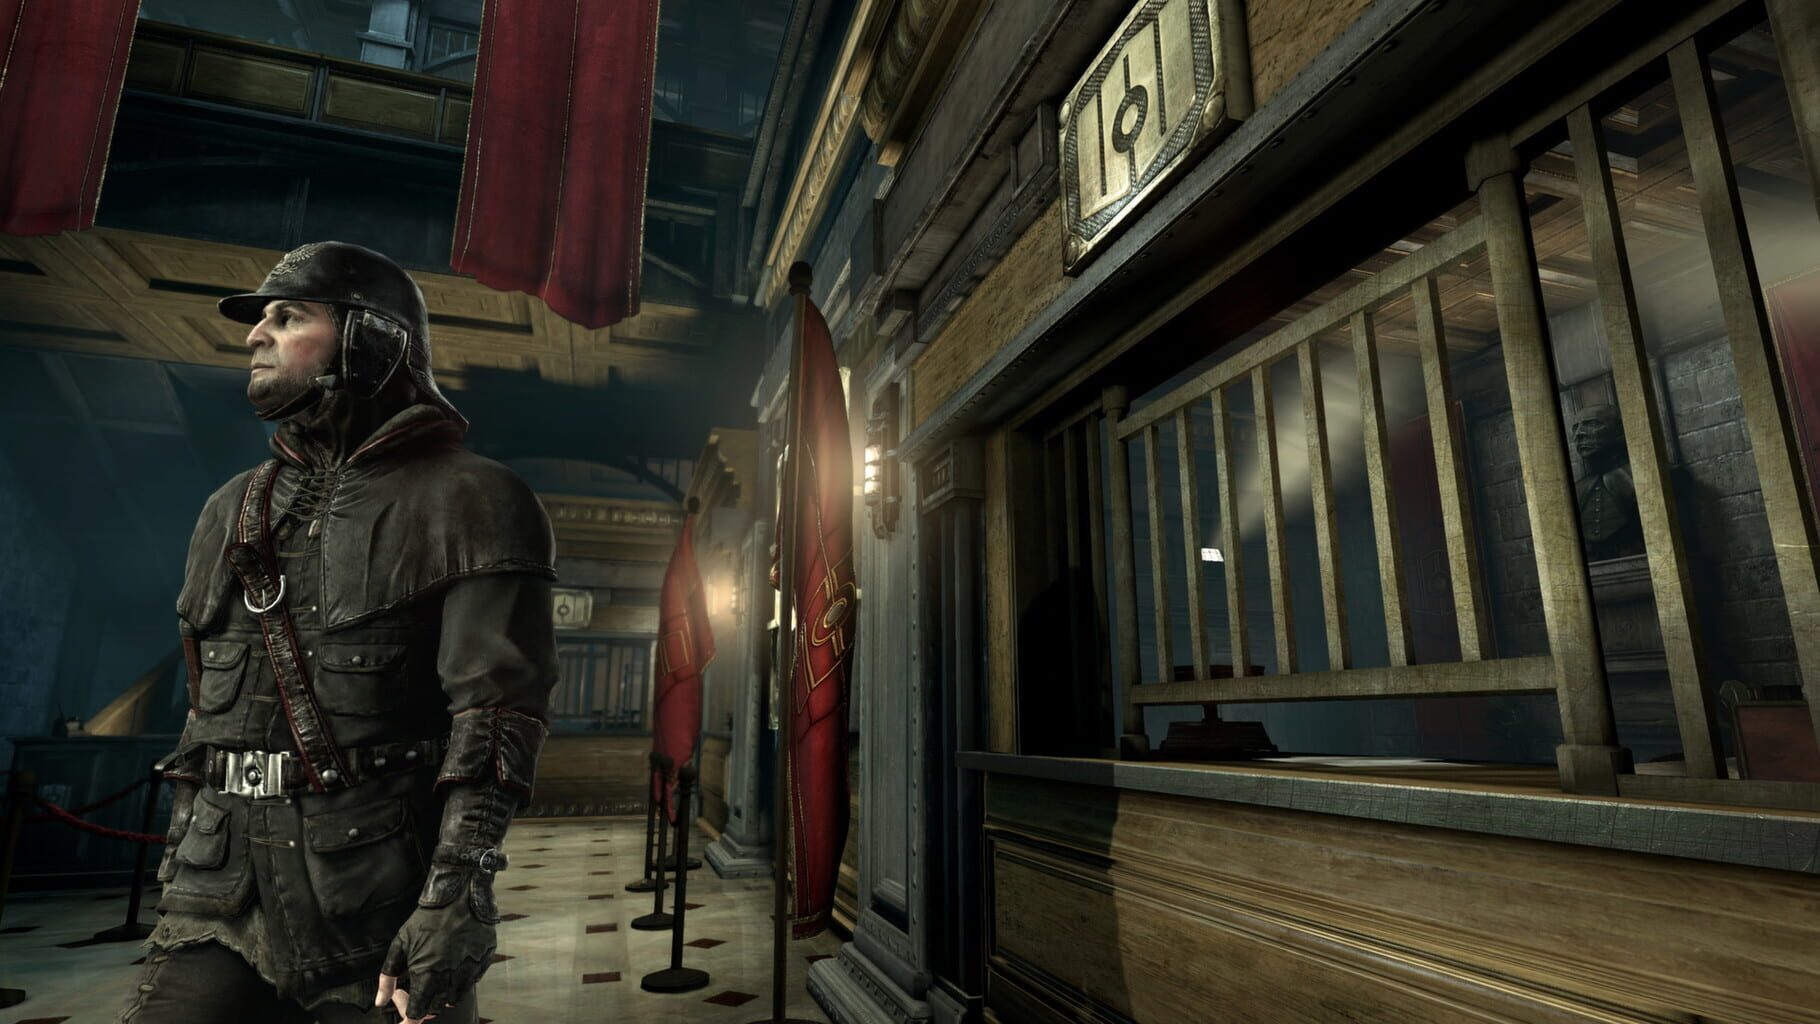 Captura de pantalla - Thief: The Bank Heist